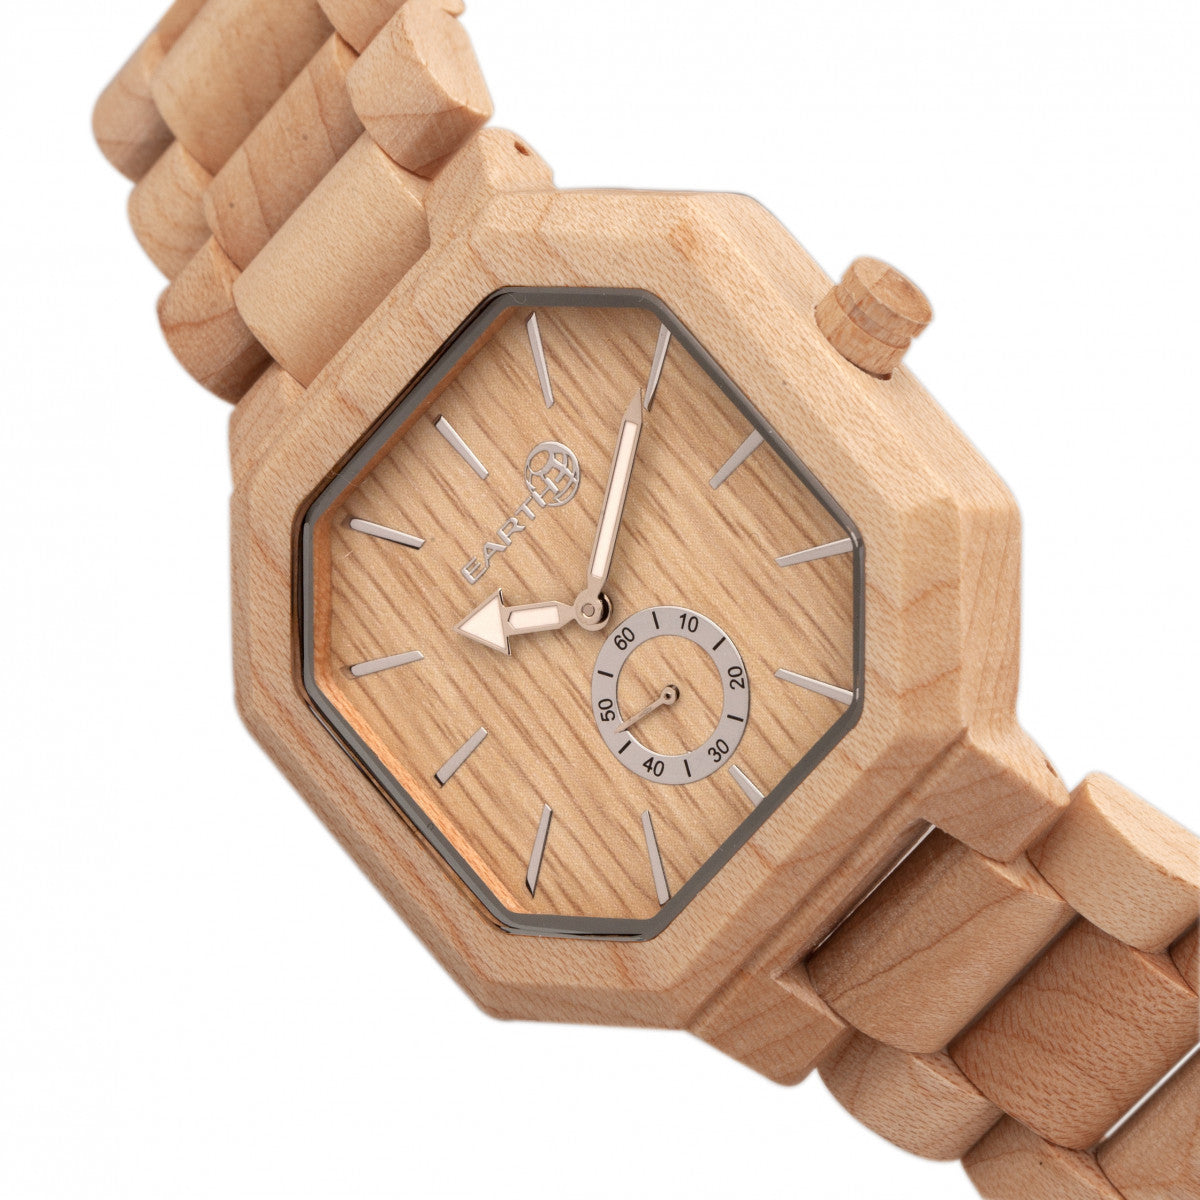 Earth Wood Acadia Bracelet Watch - Khaki/Tan - ETHEW4701